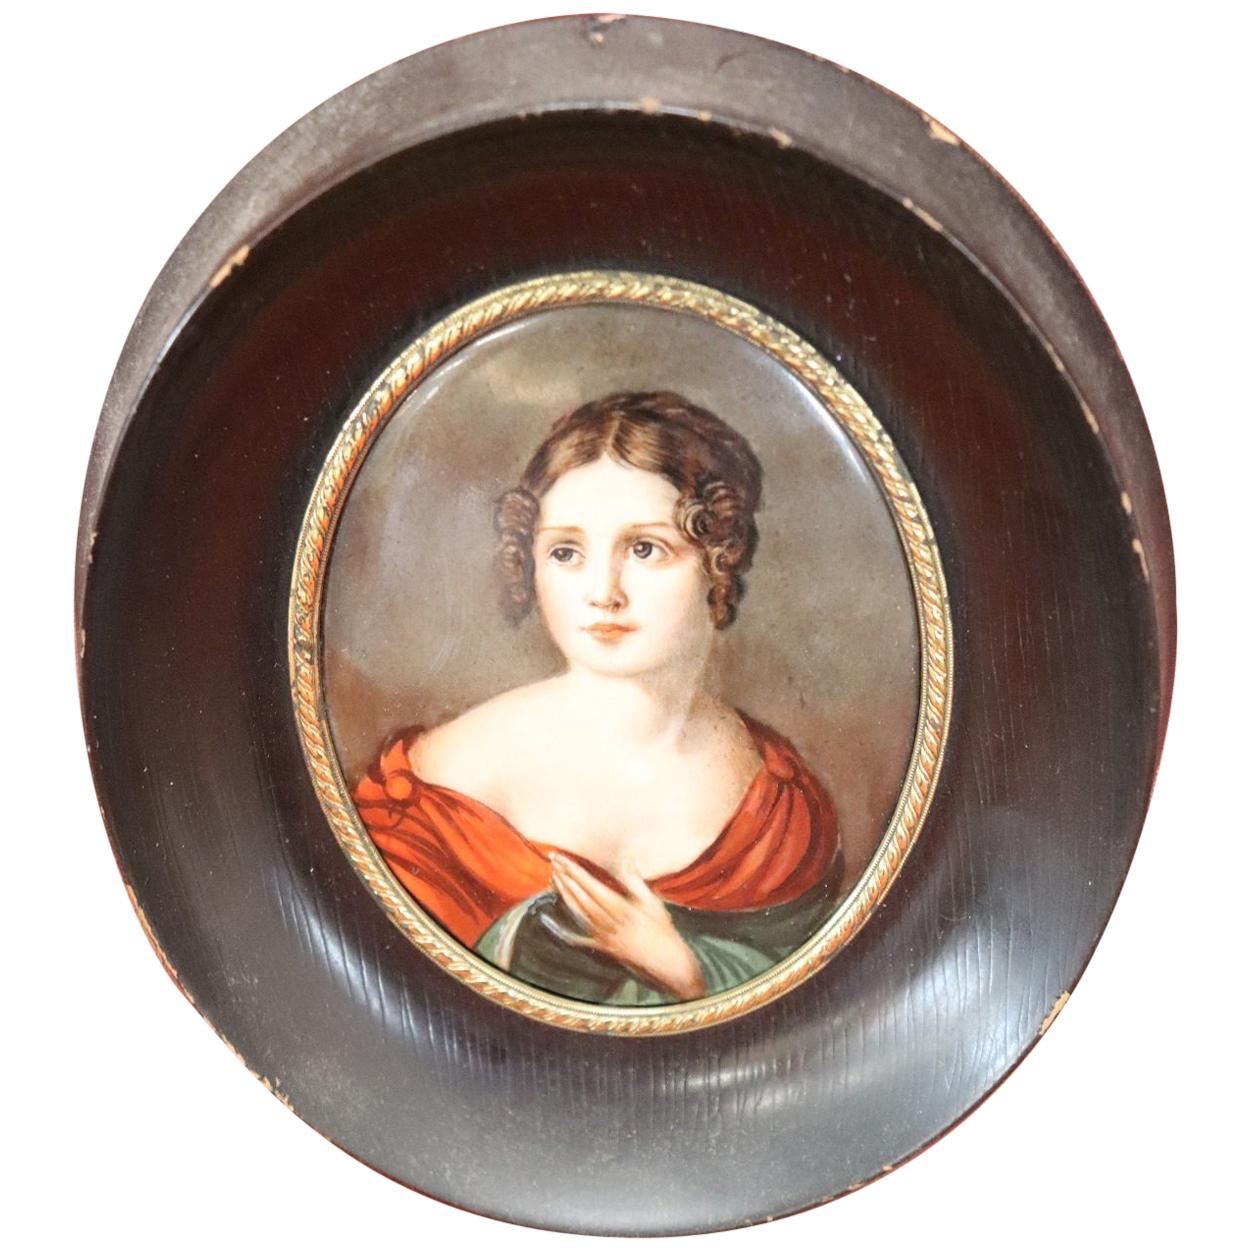 19th Century Portrait of Paolina Bonaparte in Miniature Painted on Ceramic